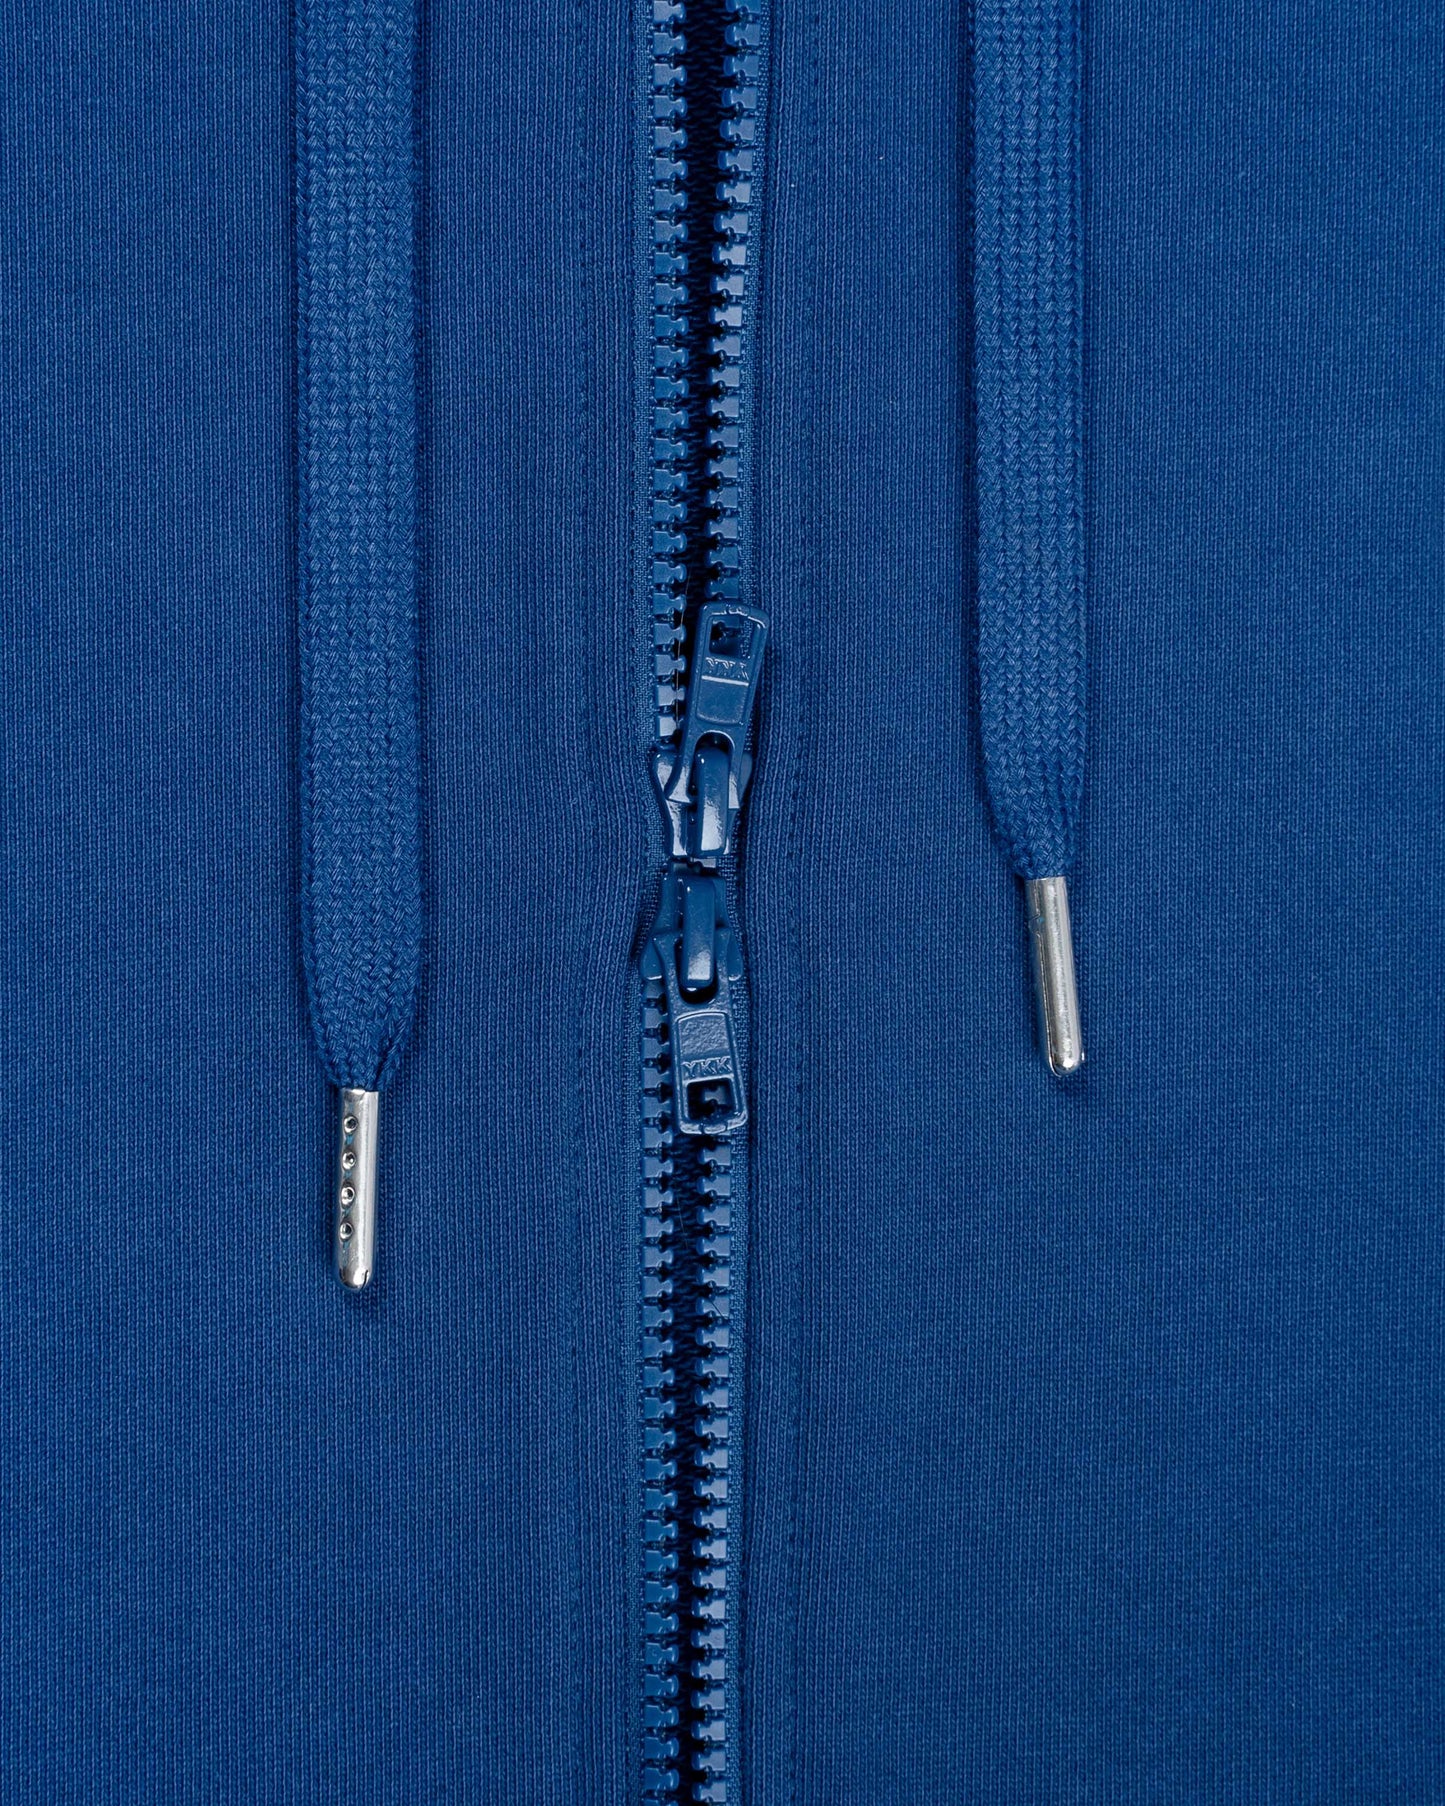 Levents® Classic Zipper Hoodie